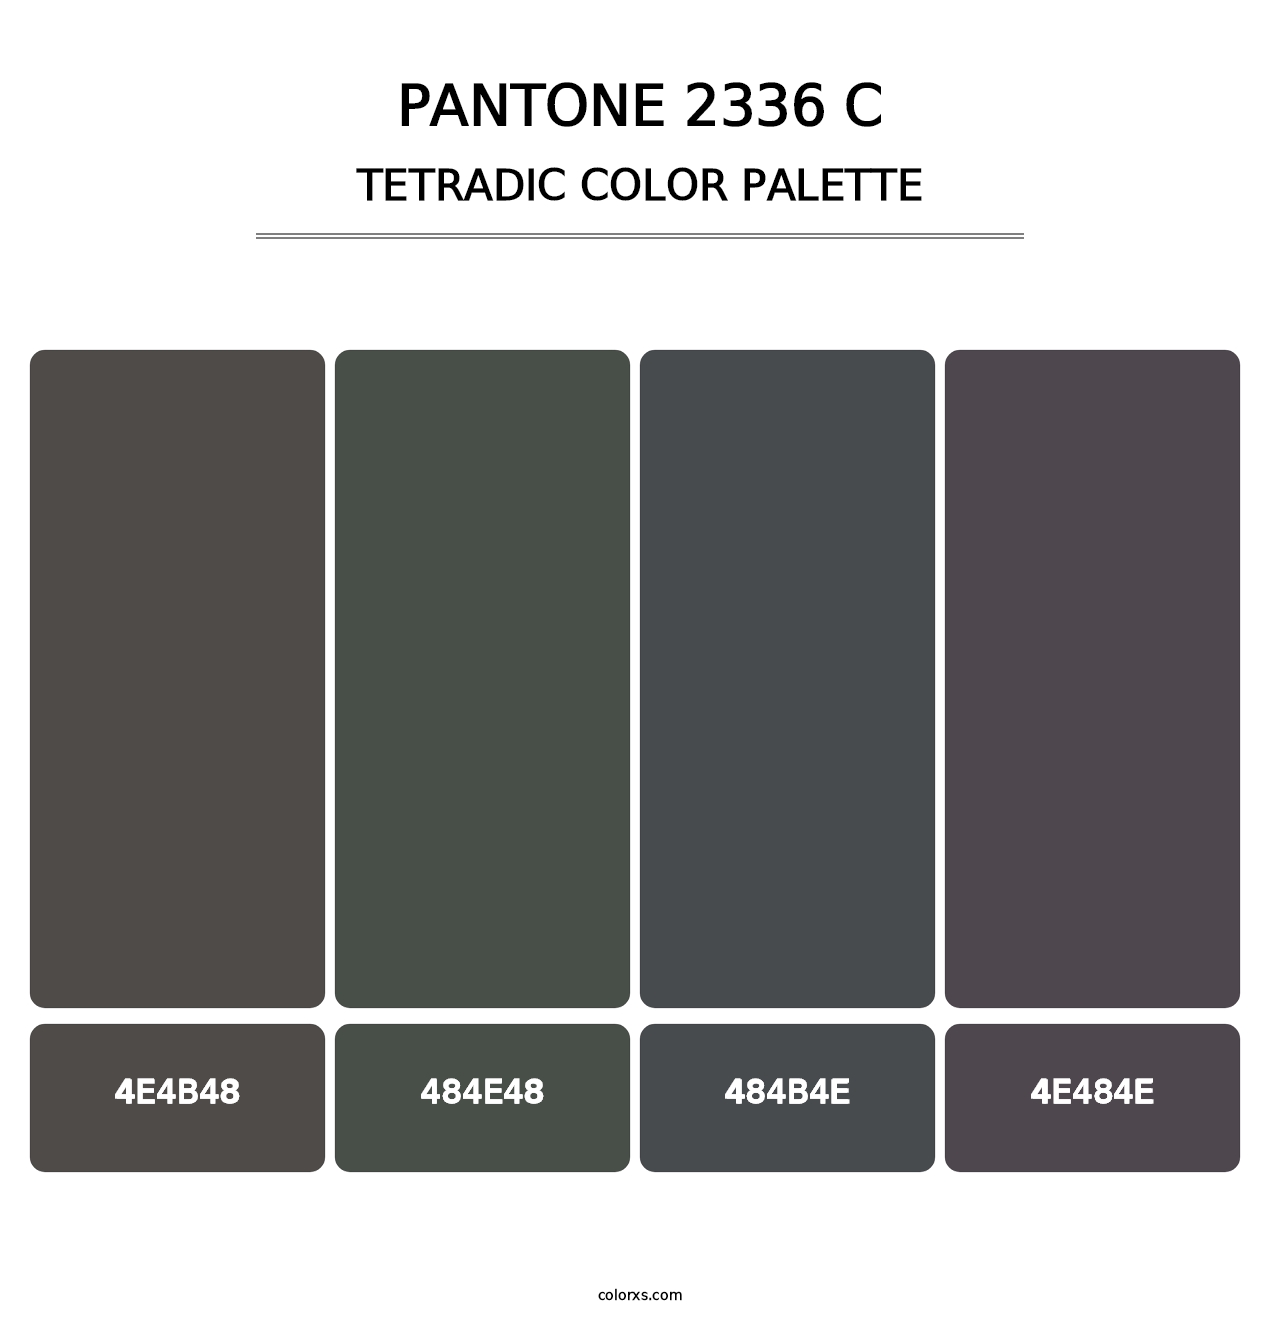 PANTONE 2336 C - Tetradic Color Palette